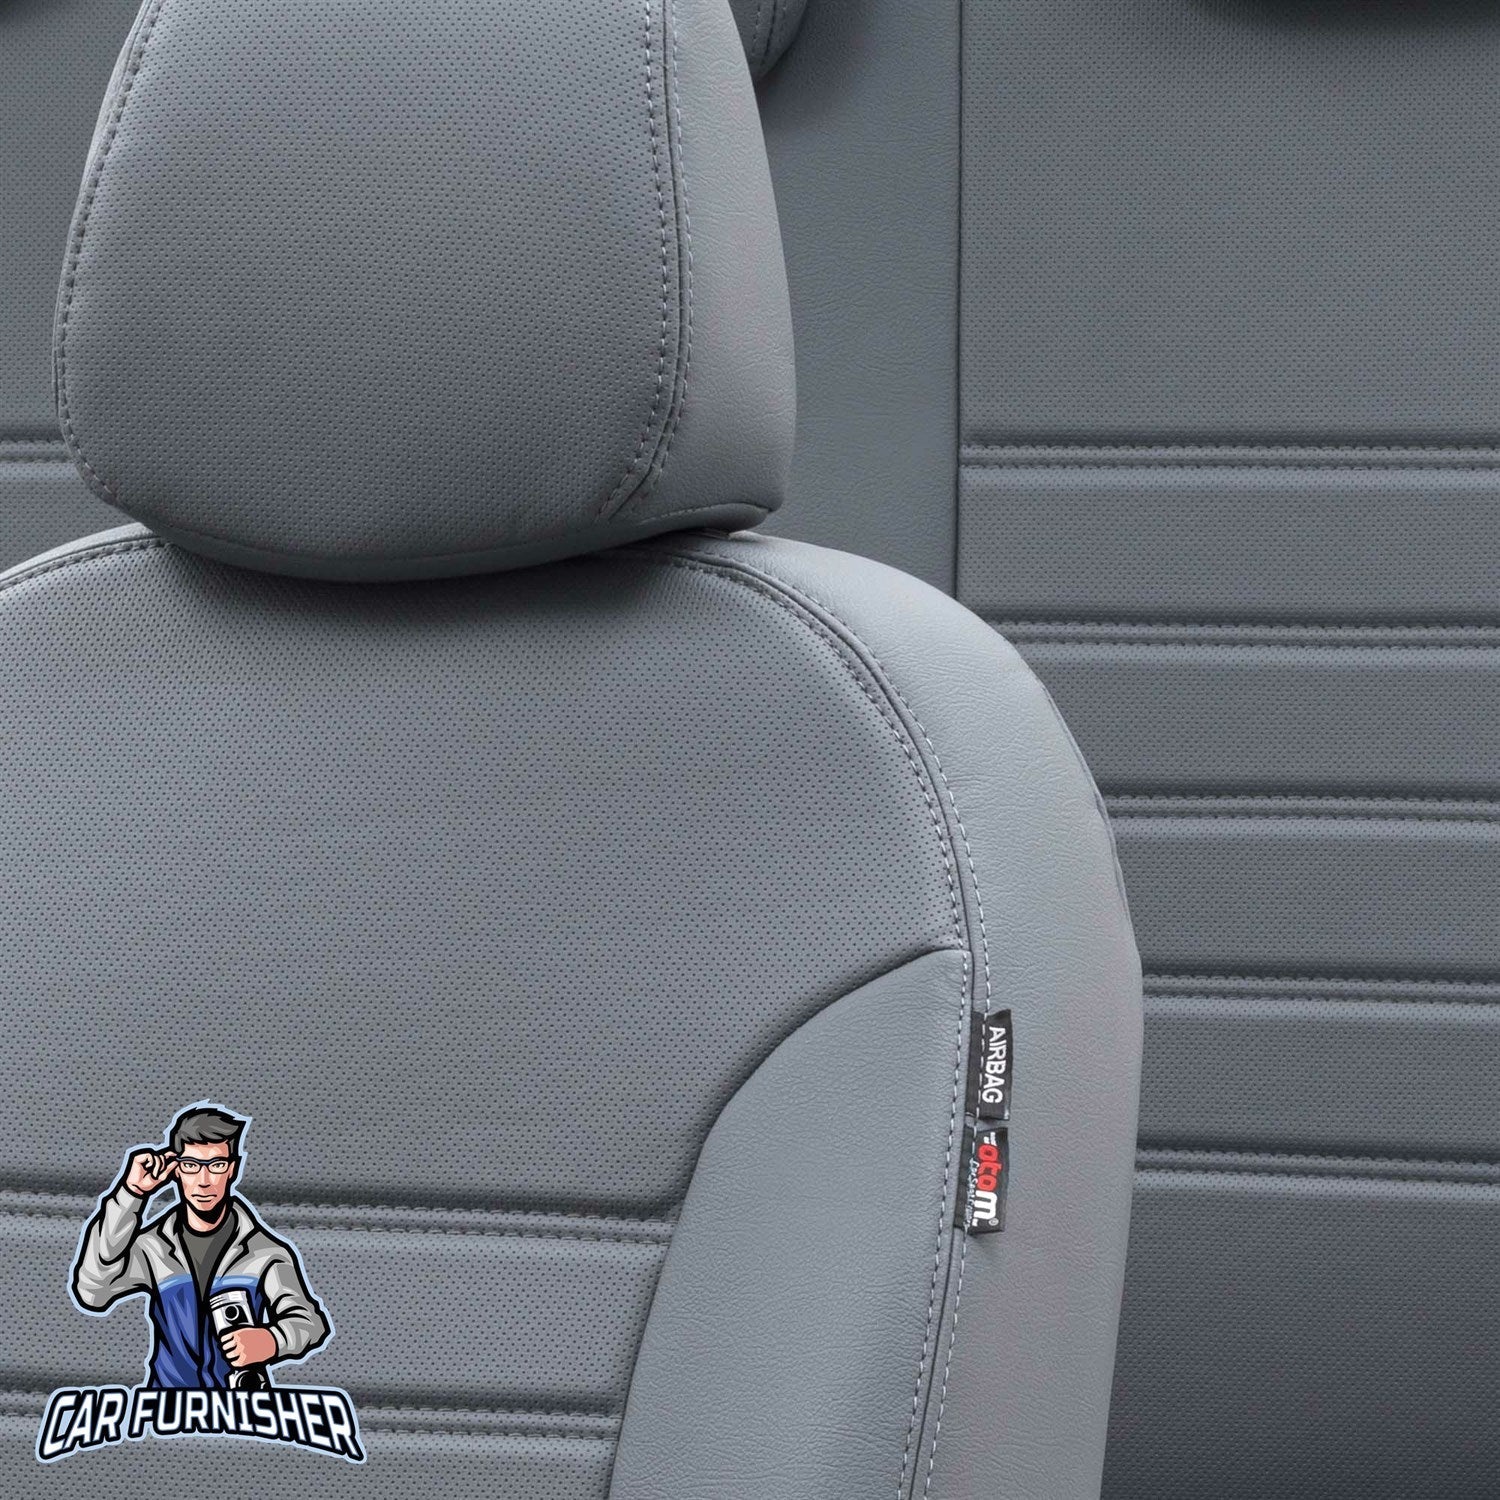 Hyundai Elantra Seat Covers Istanbul Leather Design Smoked Leather